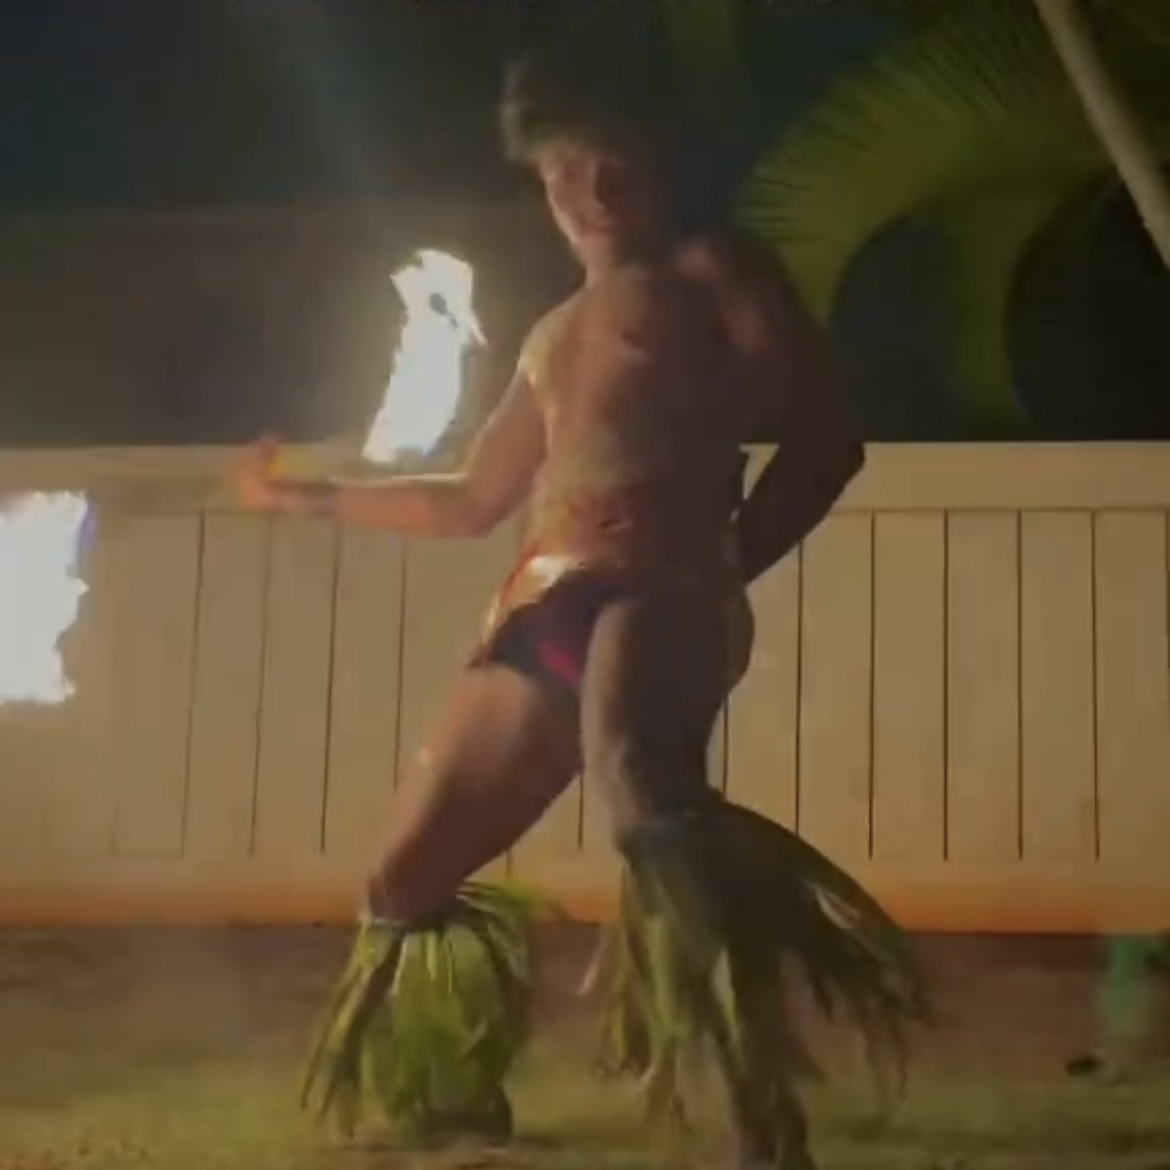 Male Pacific Islander Porn - Cock & Ball: Dry humping pacific islander showsâ€¦ ThisVid.com